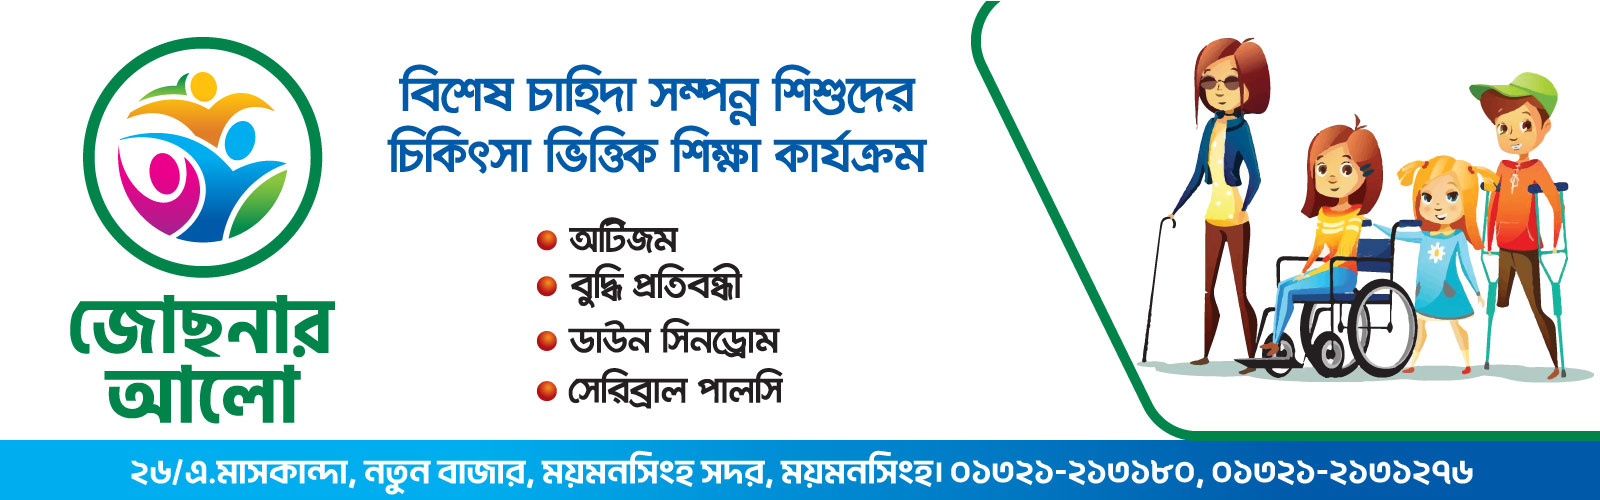 Mission Nirmal Bangla – All India Trinamool Congress